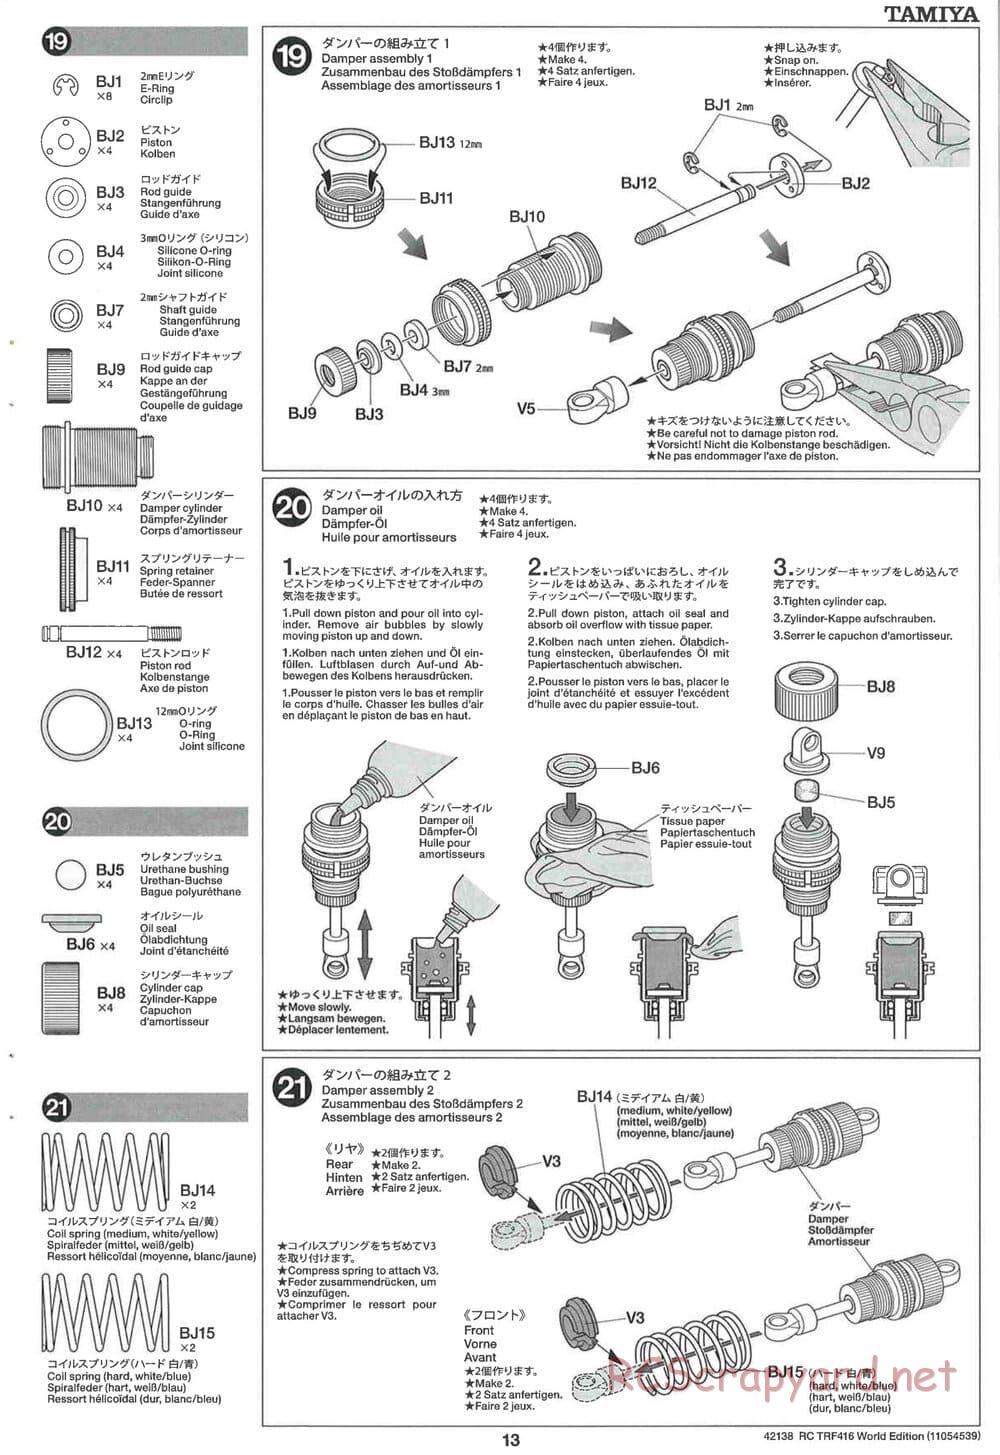 Tamiya - TRF416 World Edition Chassis - Manual - Page 13